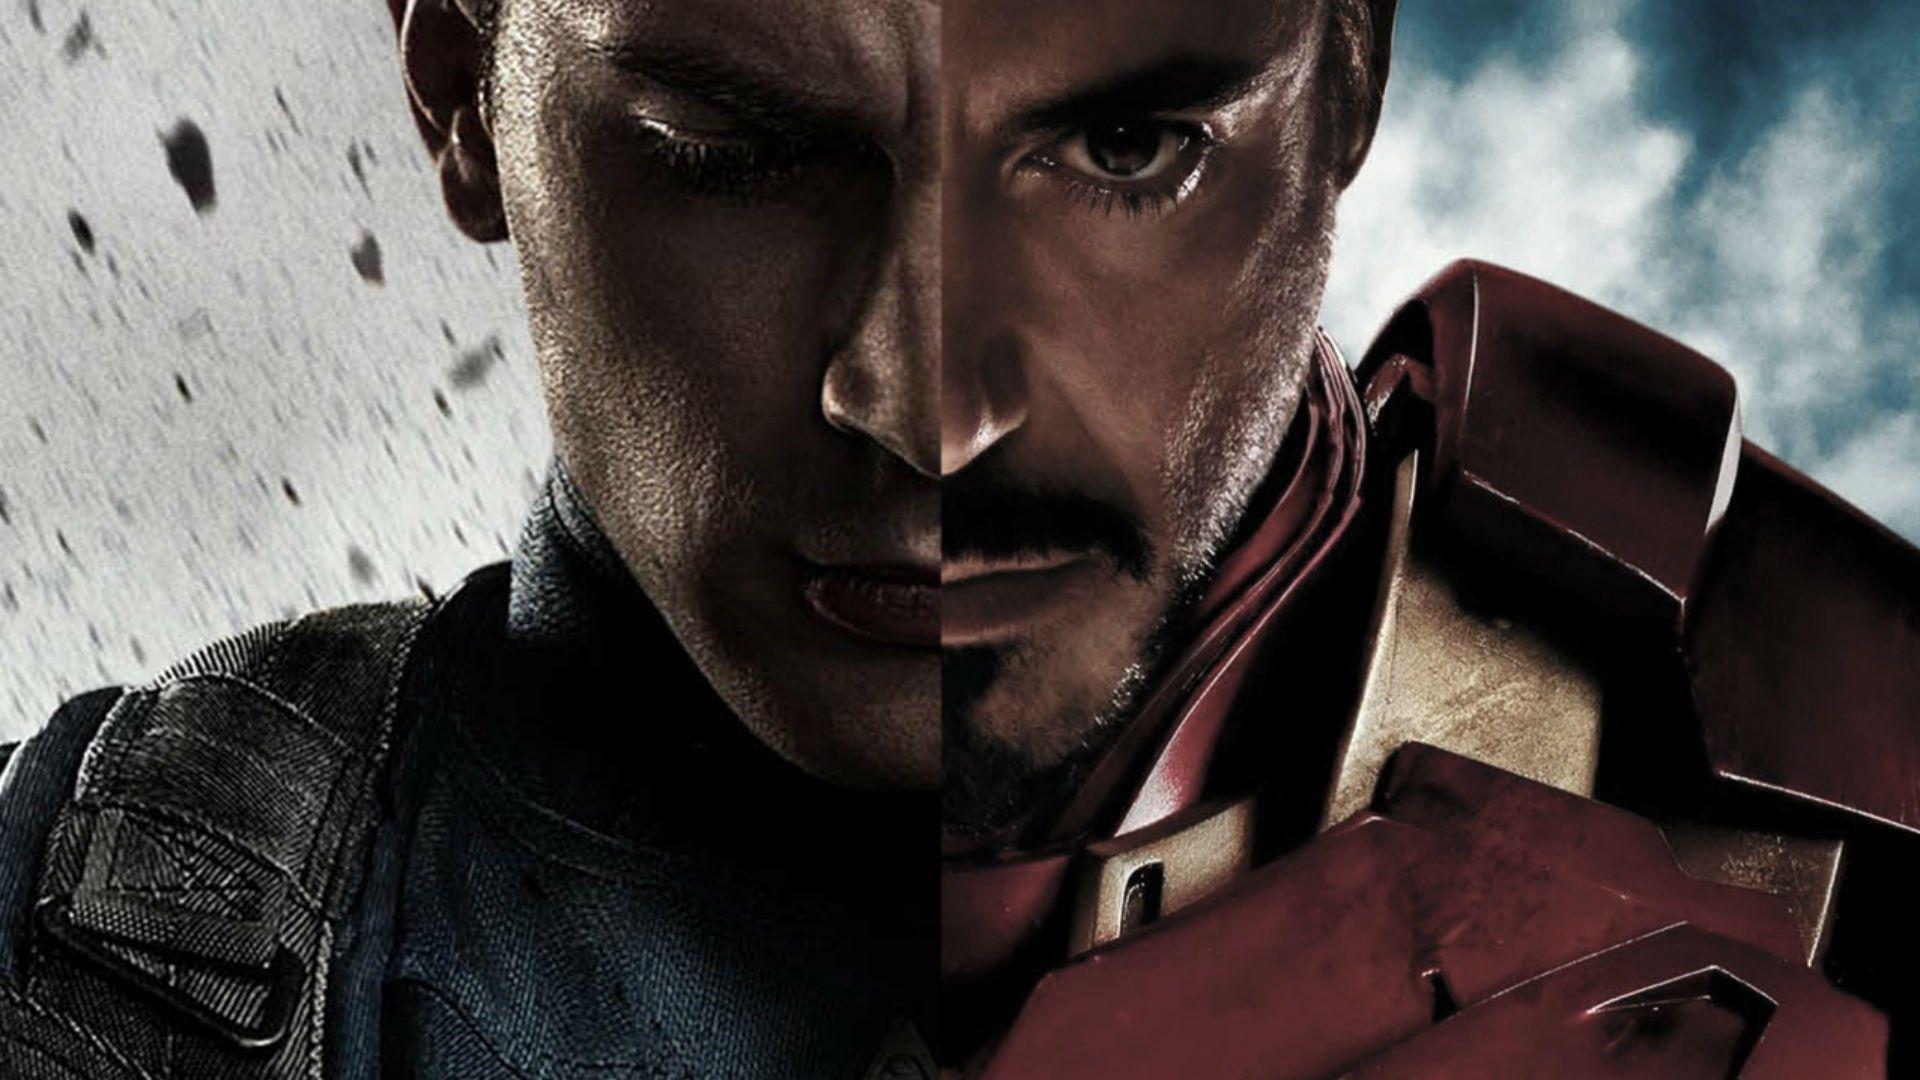 Iron Man Vs Captain America Wallpapers - Wallpaper Cave